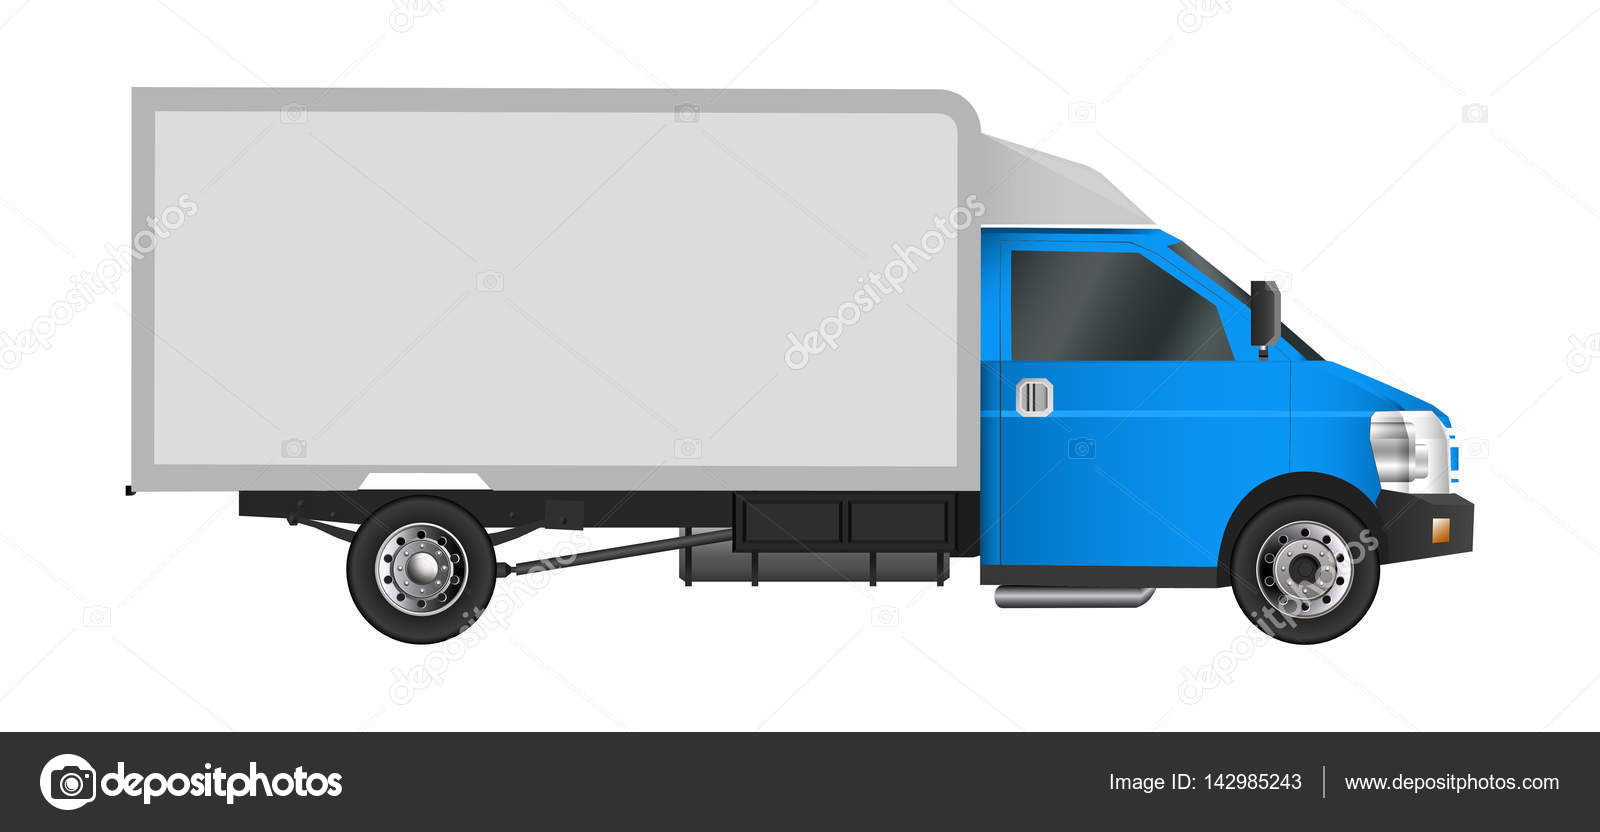 Blue Truck Template Cargo Van Vector Illustration Eps 10 Isolated On